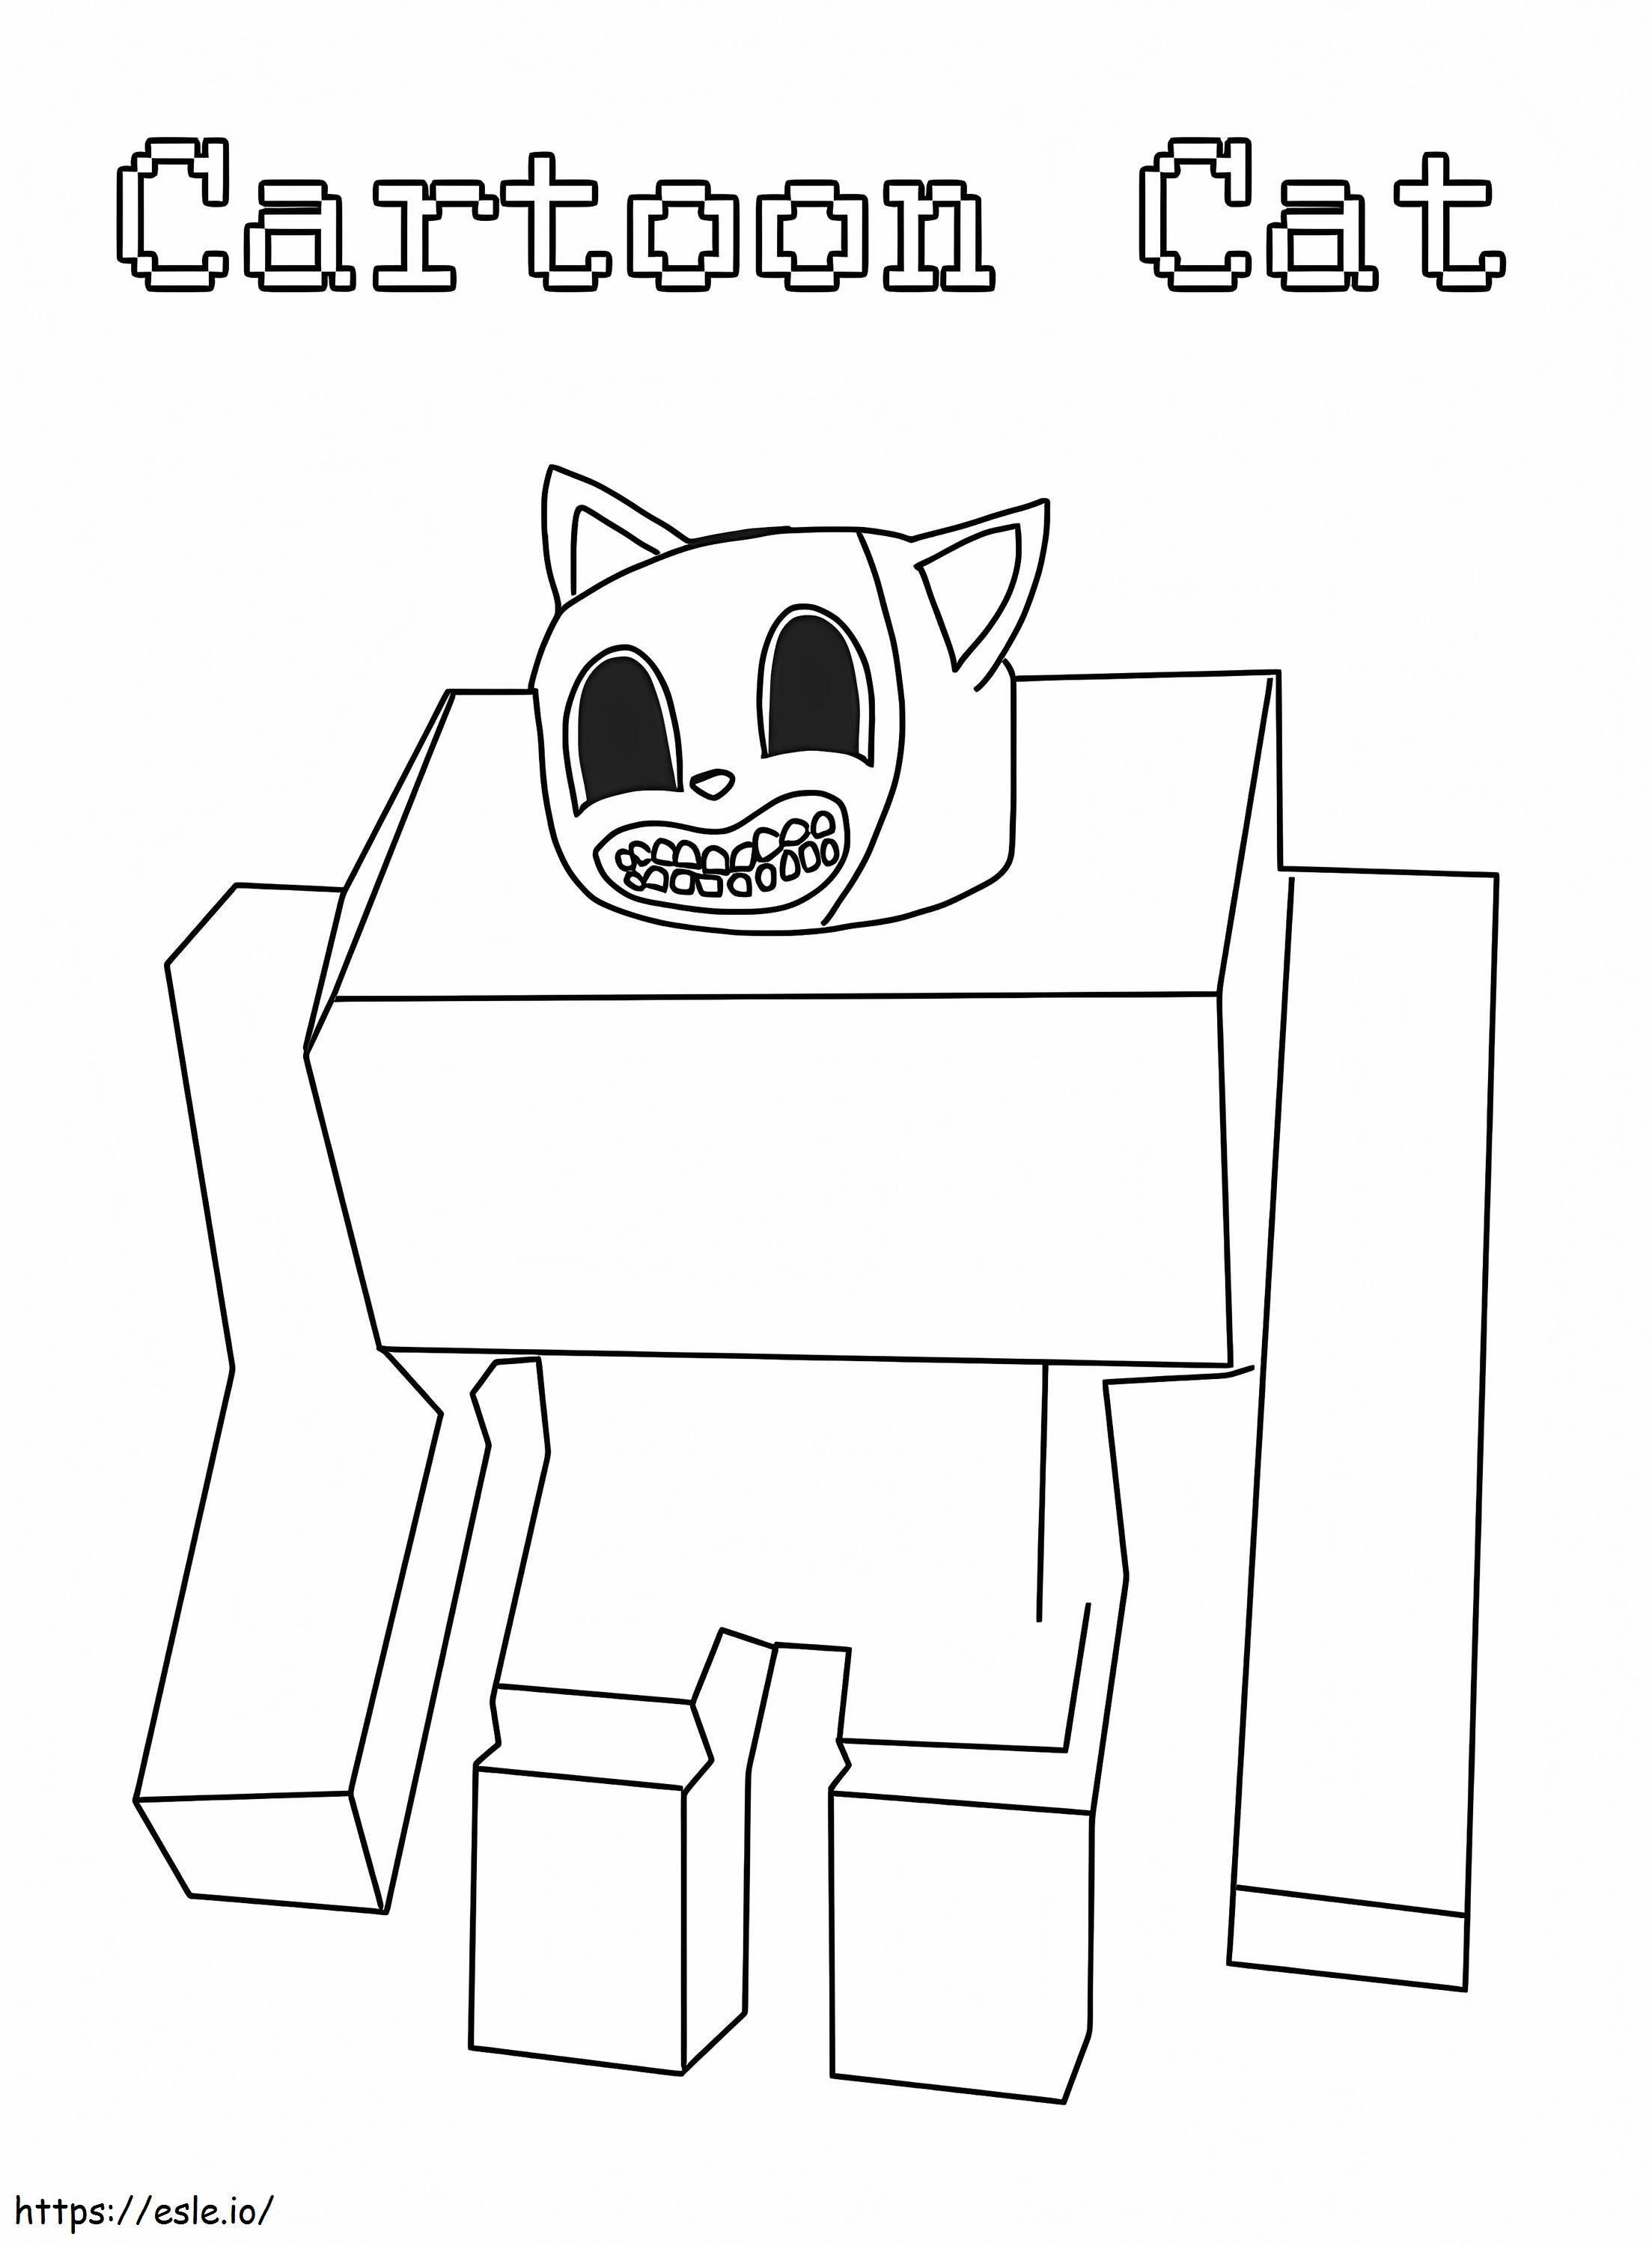 Gato de desenho animado Minecraft para colorir